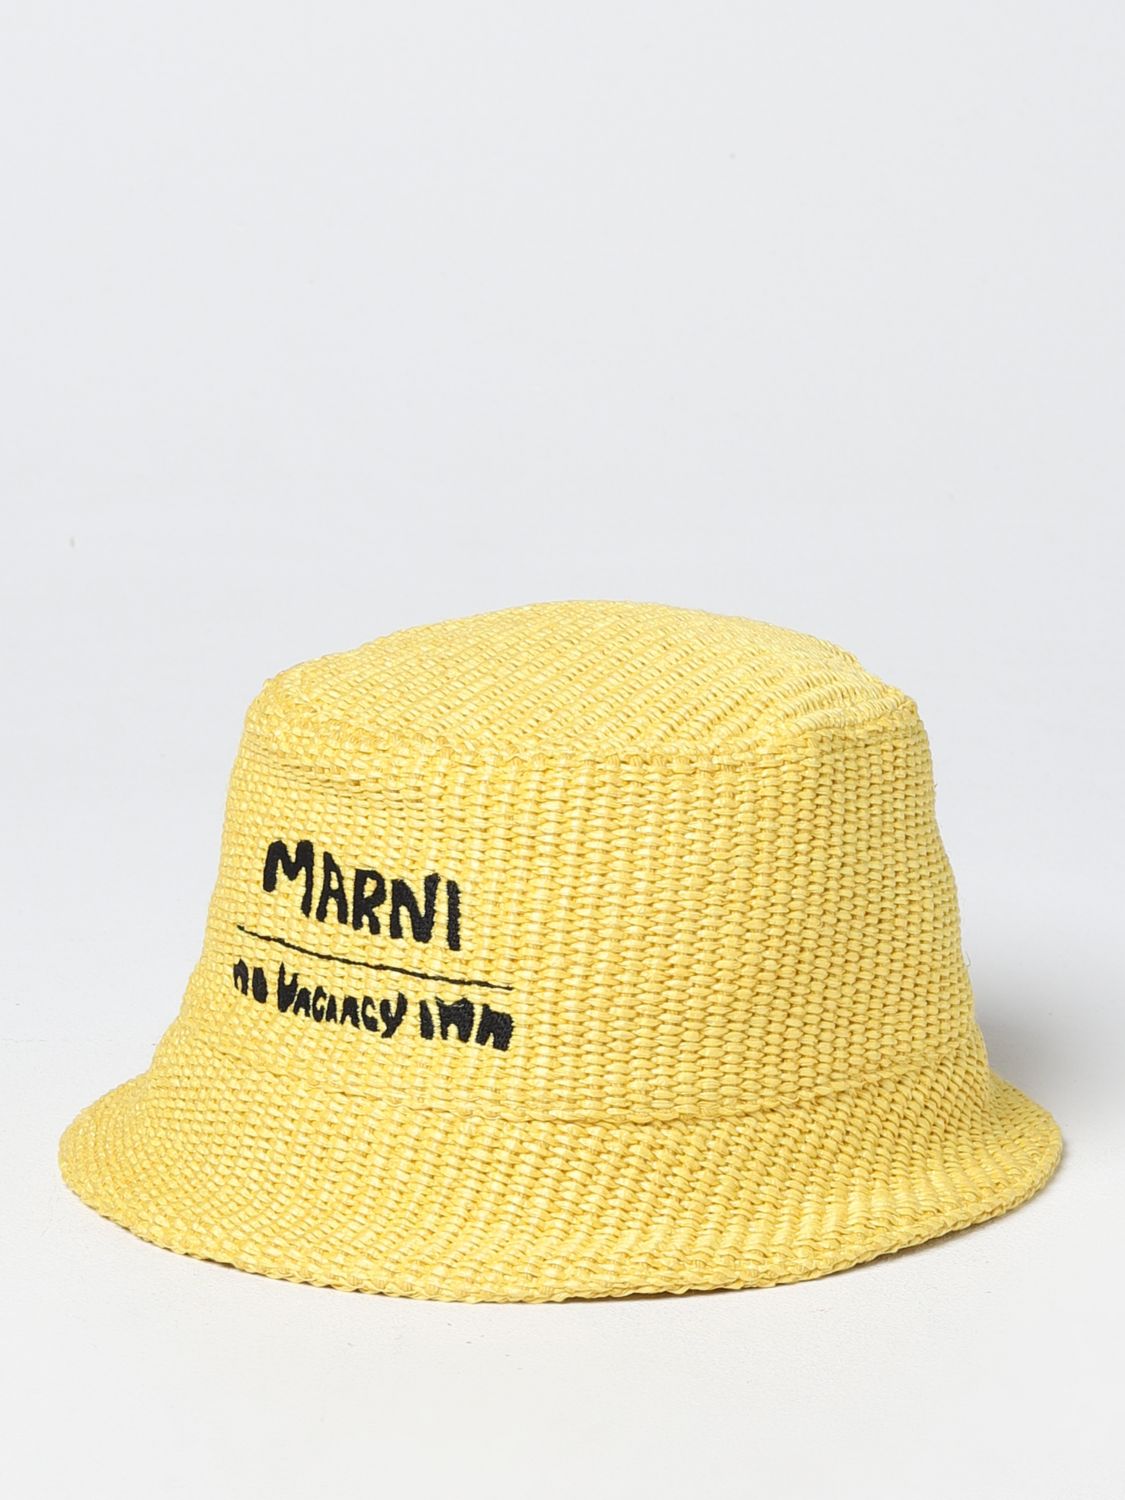 Marni X No Vacancy Inn Hat MARNI X NO VACANCY INN Men colour Yellow